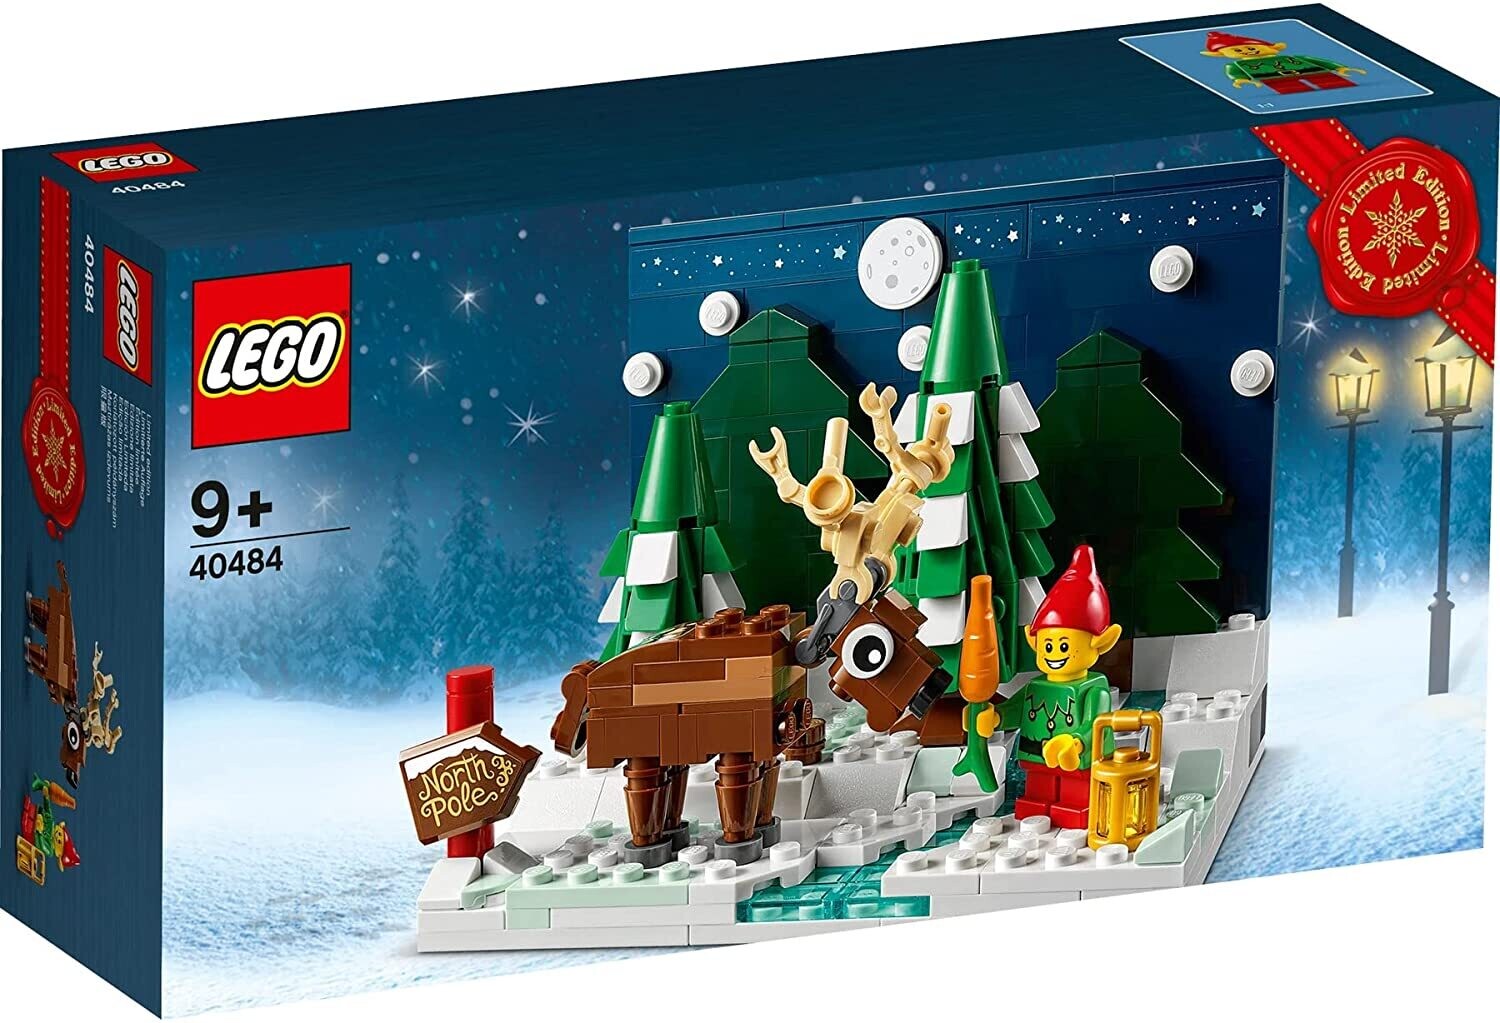 Lego 40484 Santa's Front Yard